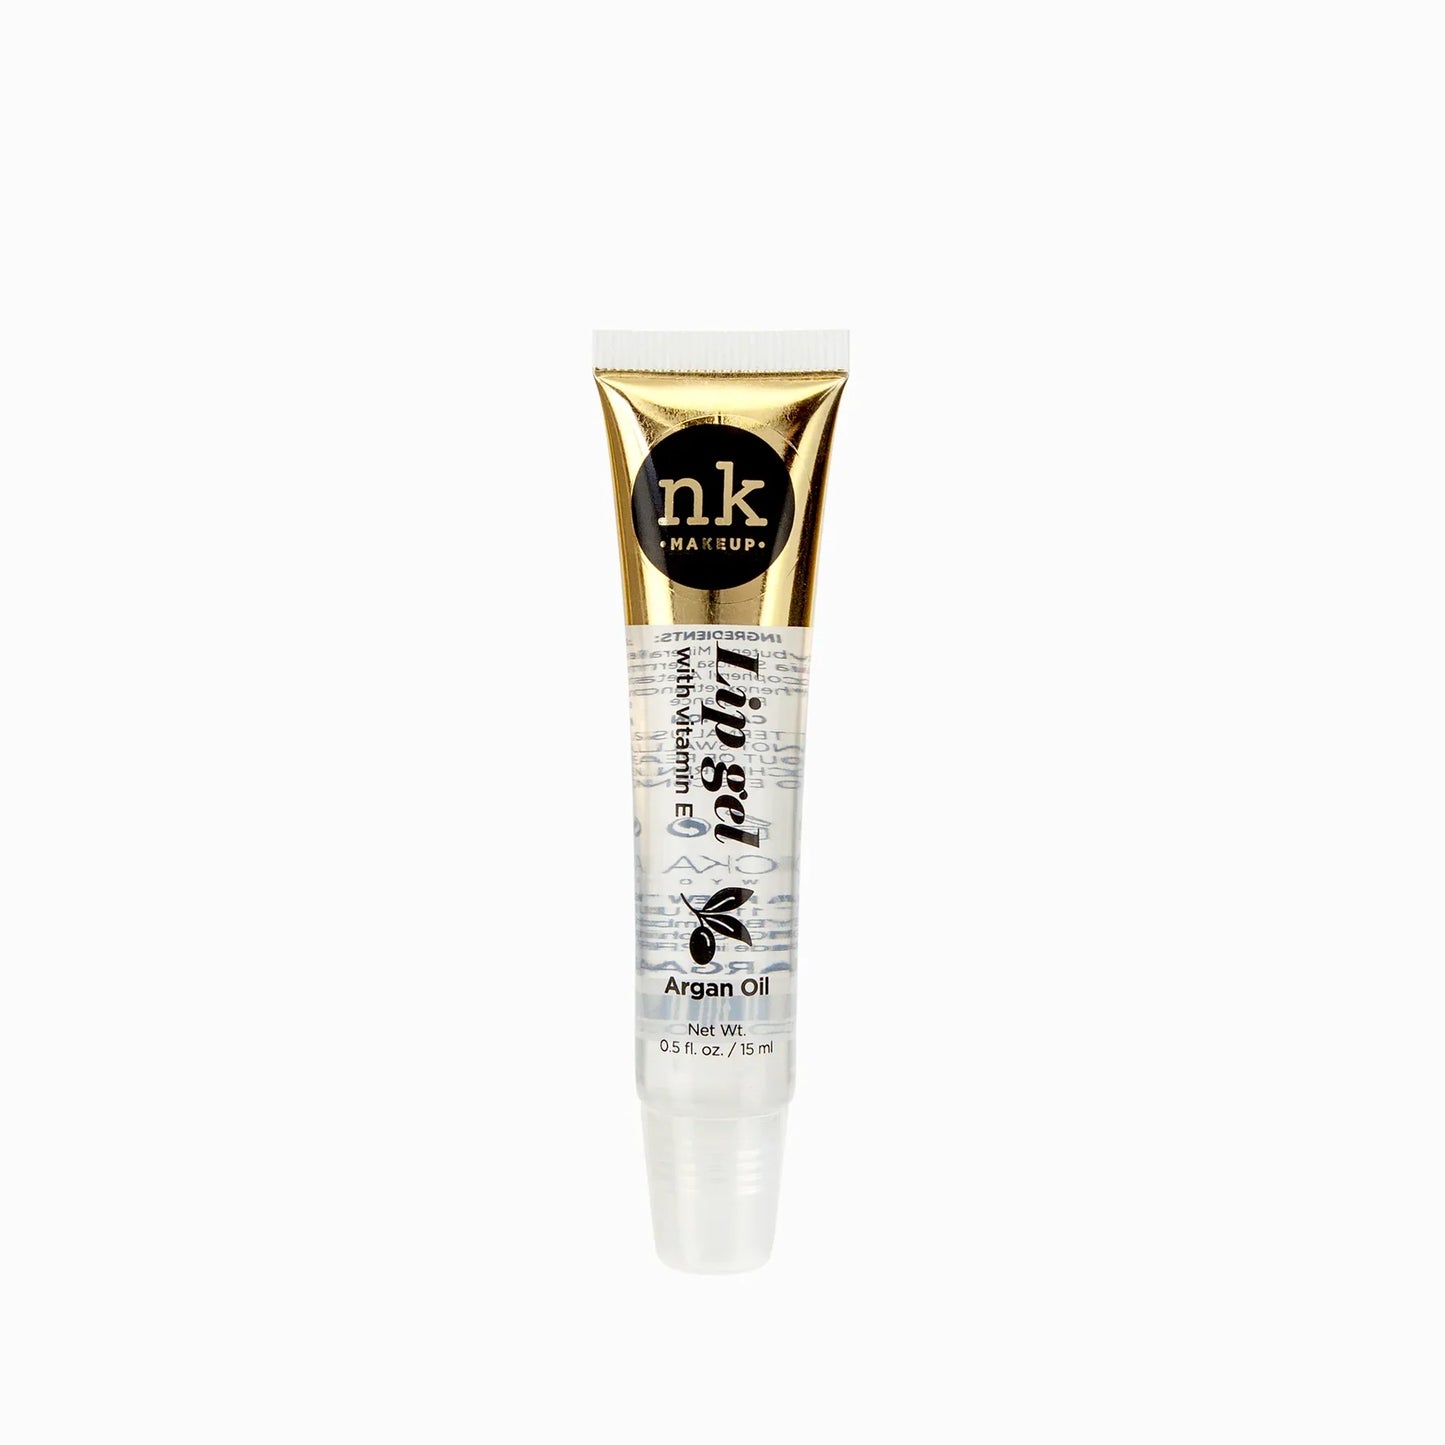 Nicka K Lip Gels - Buy 4 & Get 1 of them for FREE!